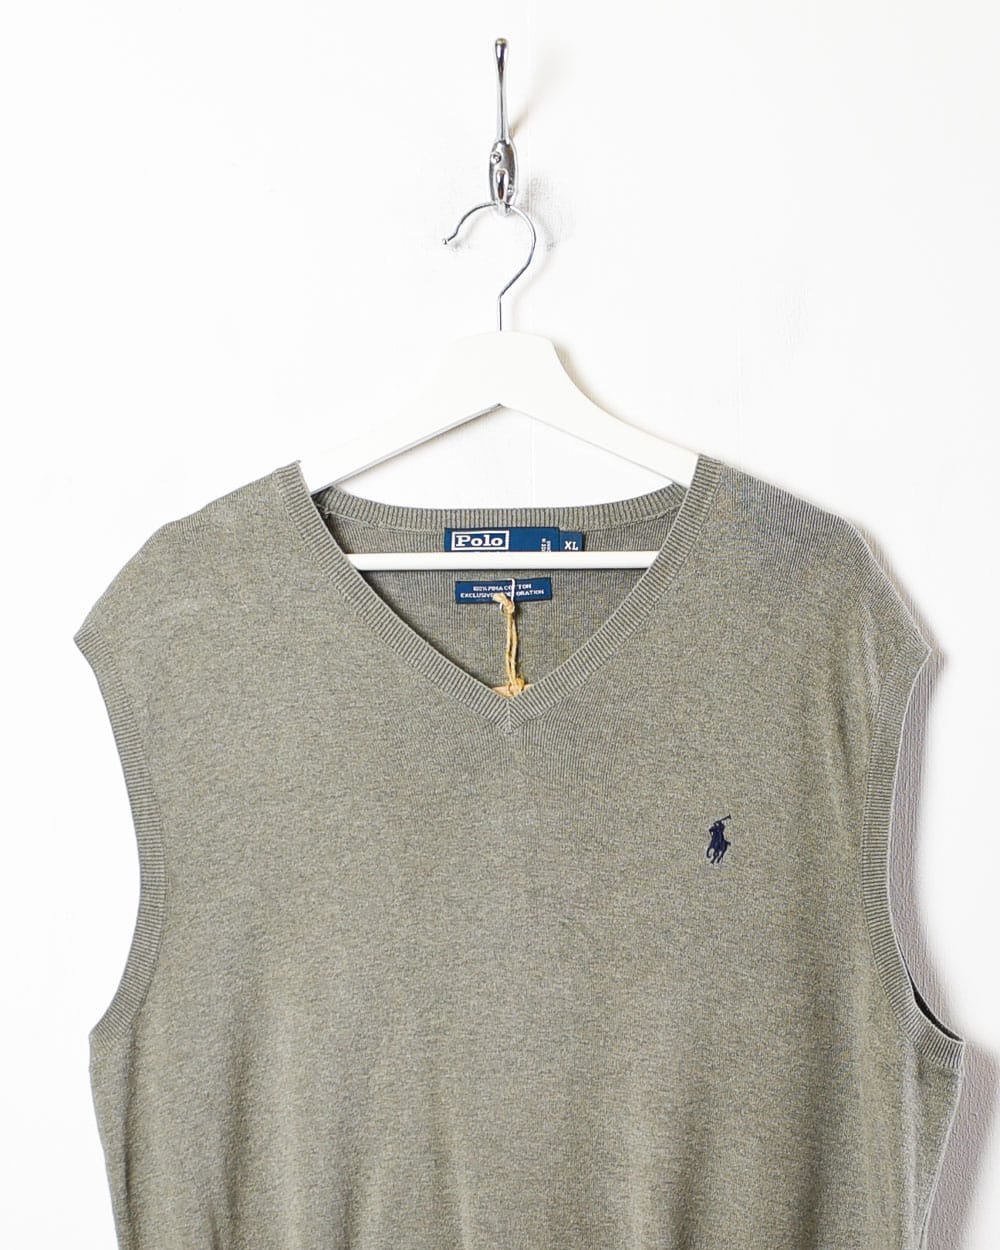 Grey Ralph Lauren Sweater Vest - X-Large